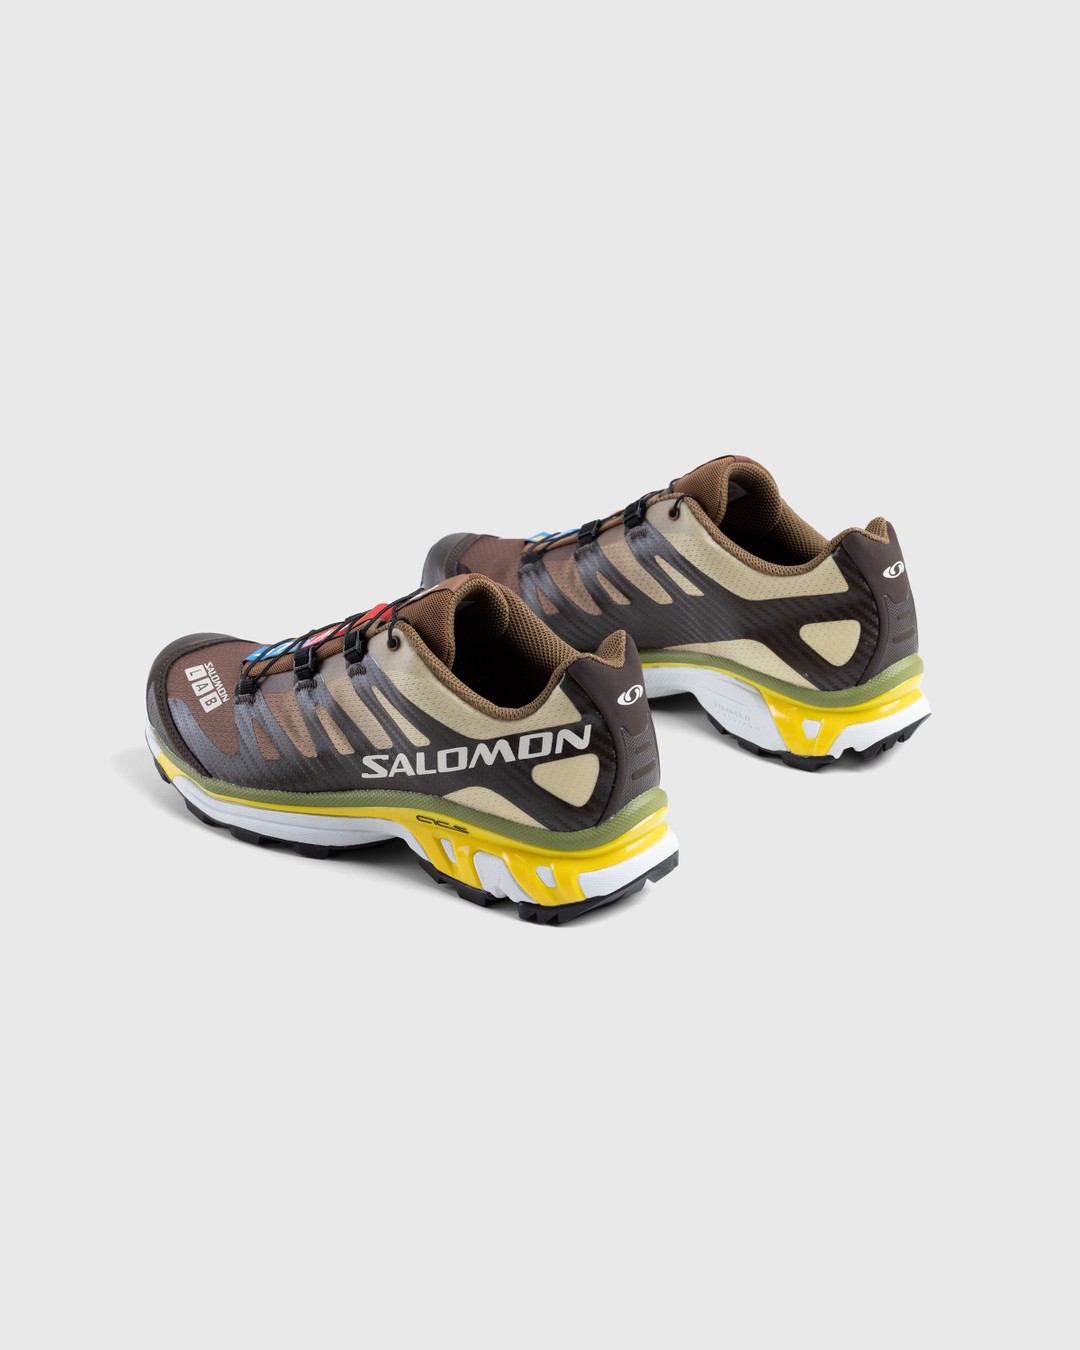 Salomon – XT-4 Delicioso/Toffee/Empire Yellow - Low Top Sneakers - Brown - Image 4